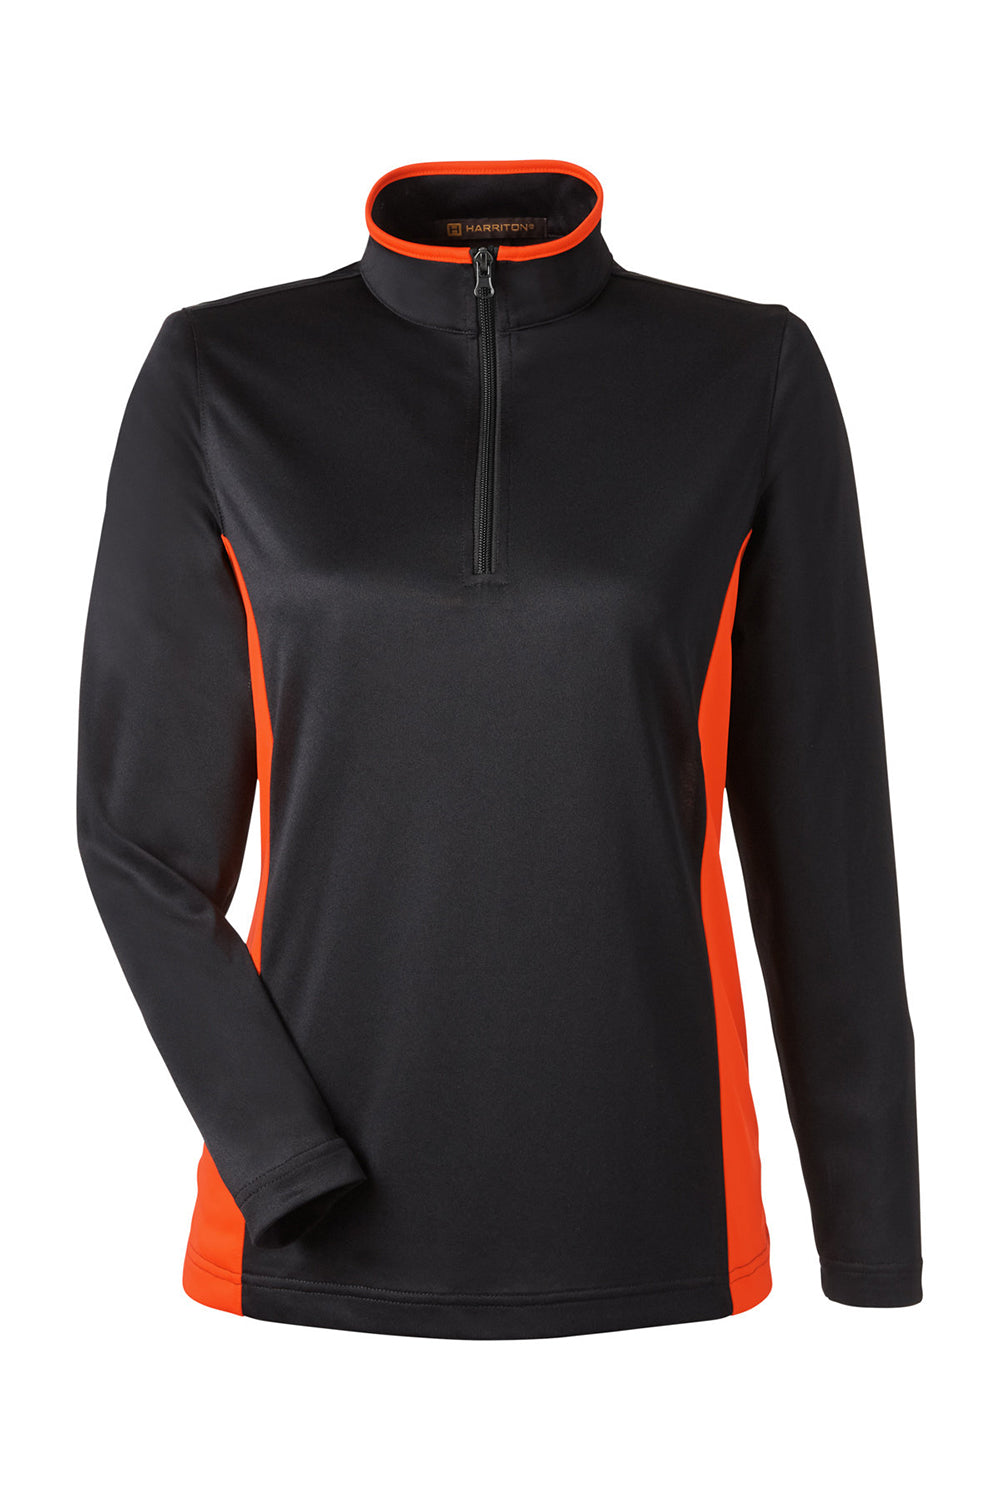 Harriton M786W Womens Flash Performance Moisture Wicking Colorblock 1/4 Zip Sweatshirt Black/Team Orange Flat Front